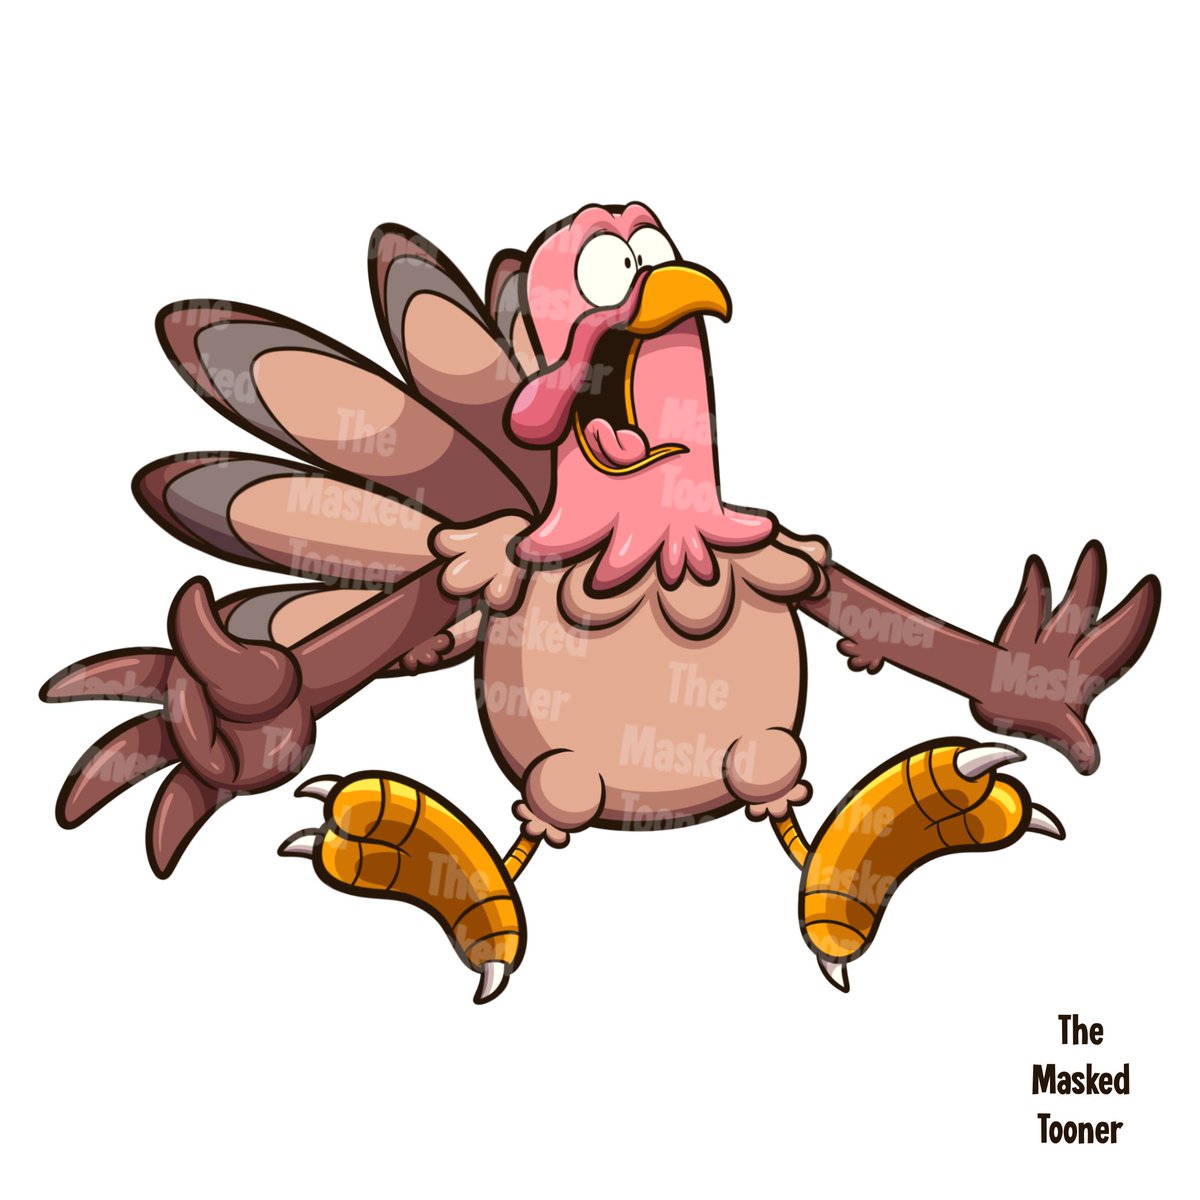 Shocked turkey 😲🦃
-
#turkey #animal #bird #thanksgiving #thanksgivingturkey #scared #shocked #funny #cartoon #themaskedtooner #vector #vectorart #stockphoto #illustration #tshirtdesign #cartoontshirt #dutchartist #characterdesign #graphicdesign #cartoonphoto #photocartoon